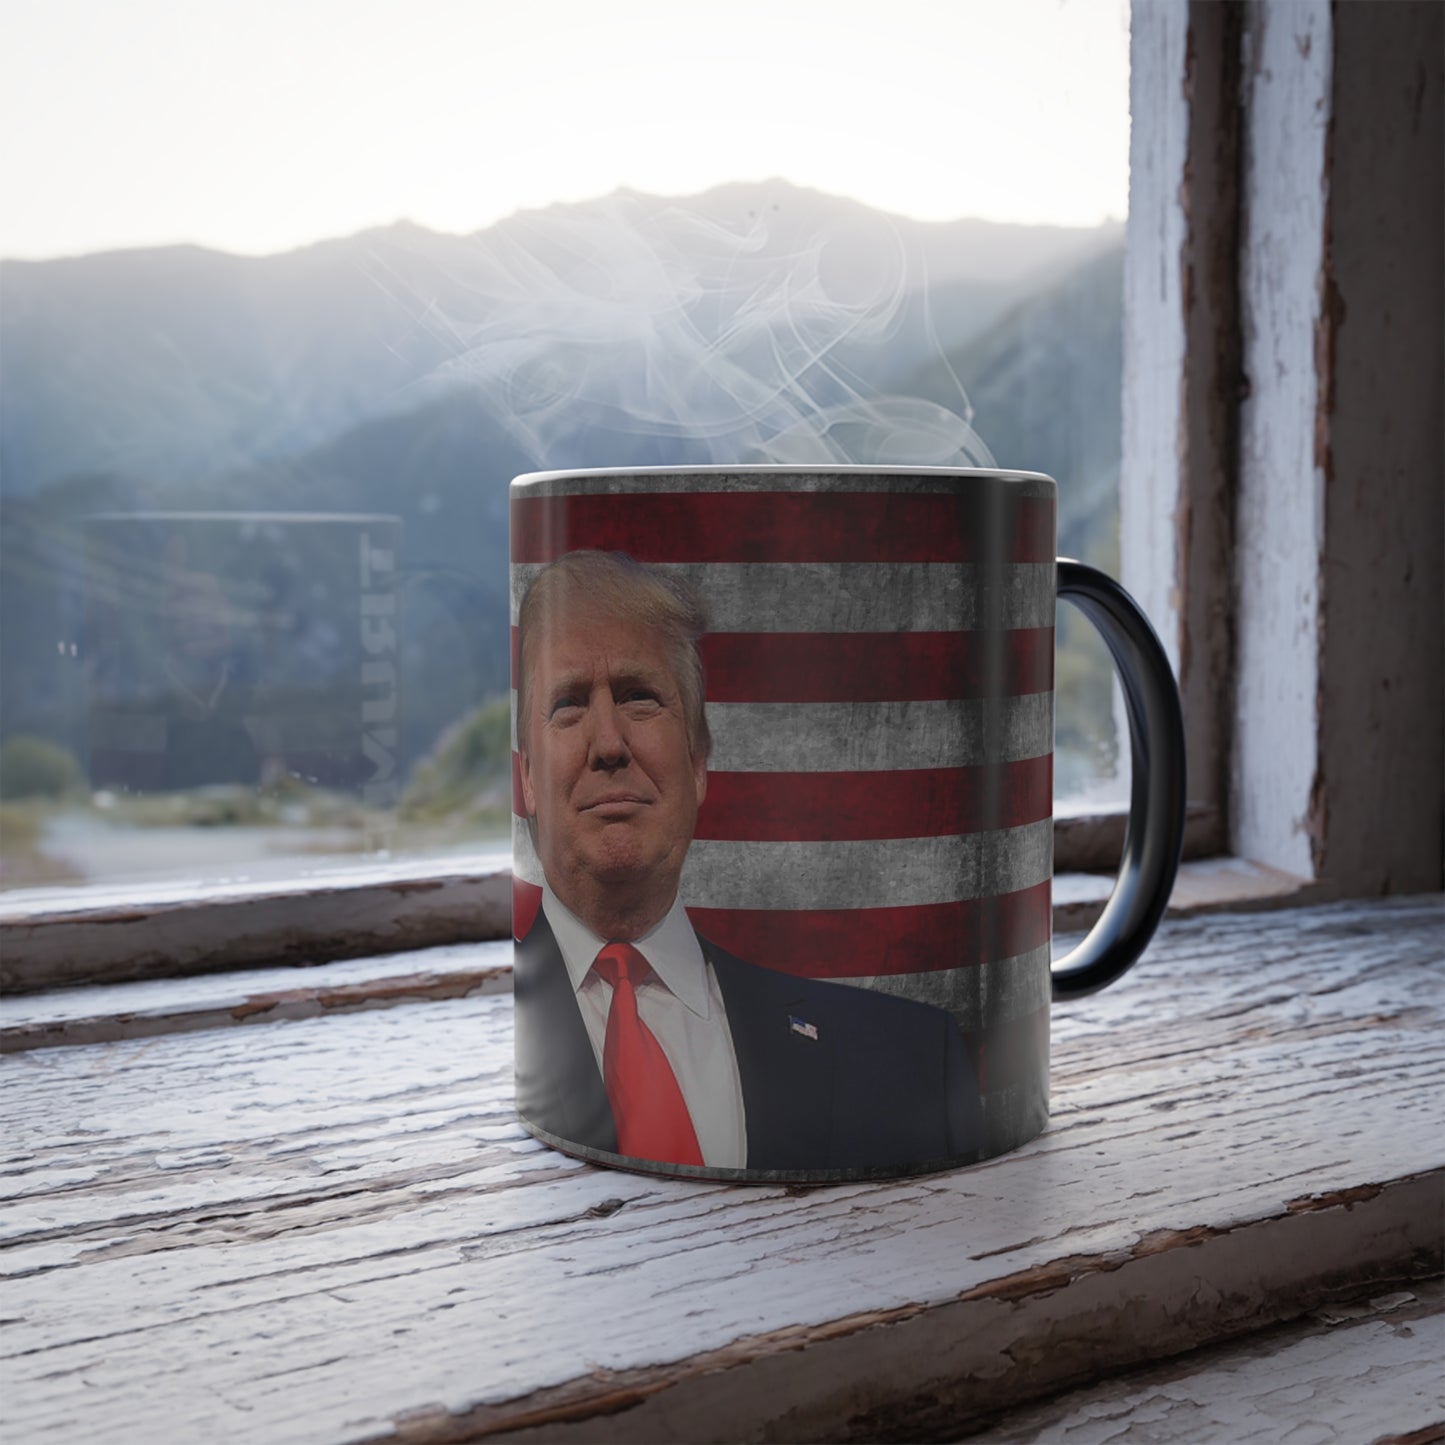 Color Changing Trump American Flag Heat Reacting Coffee Mug 11oz